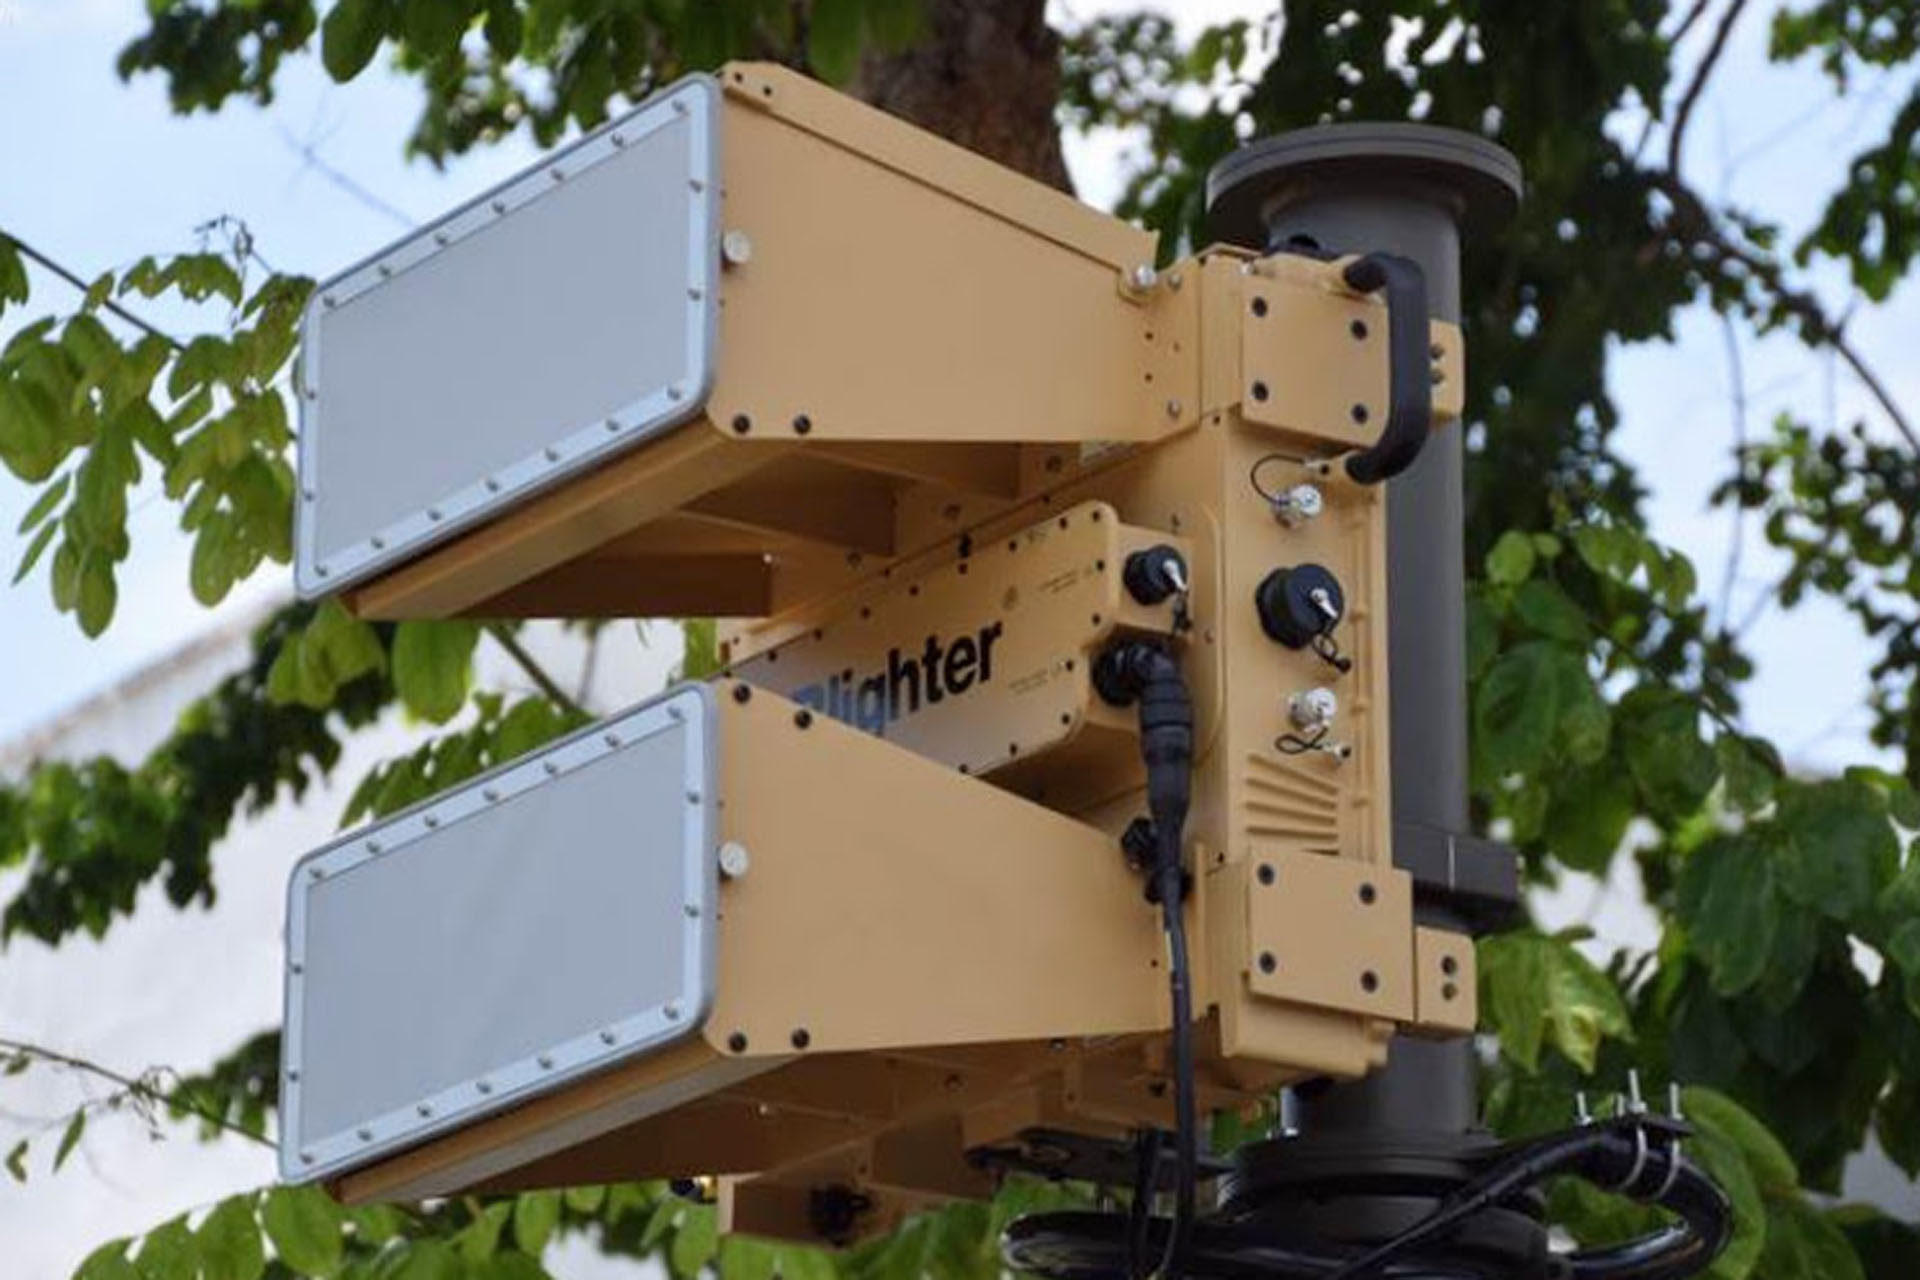 Blighter B402-HP Ground Surveillance Radar with M10S Antennas (Light Stone)